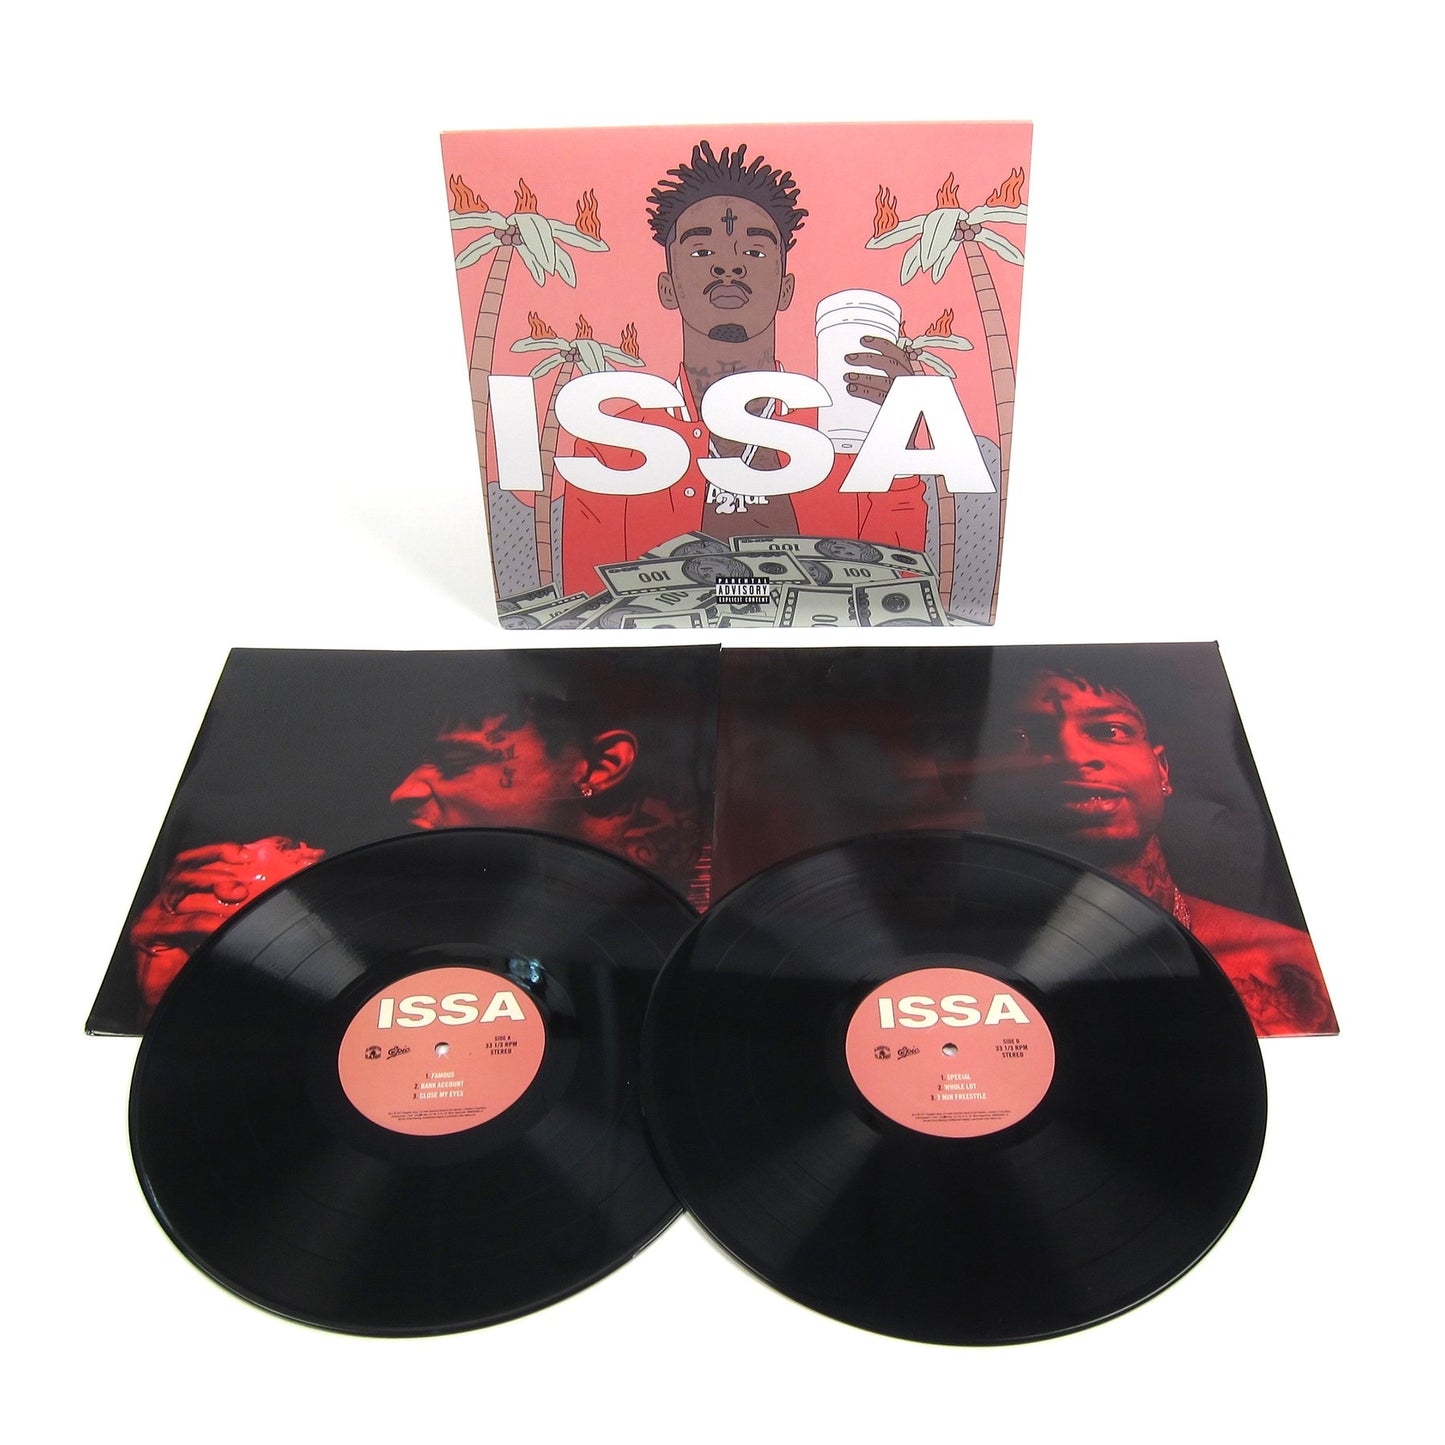 21 savage - Issa Album